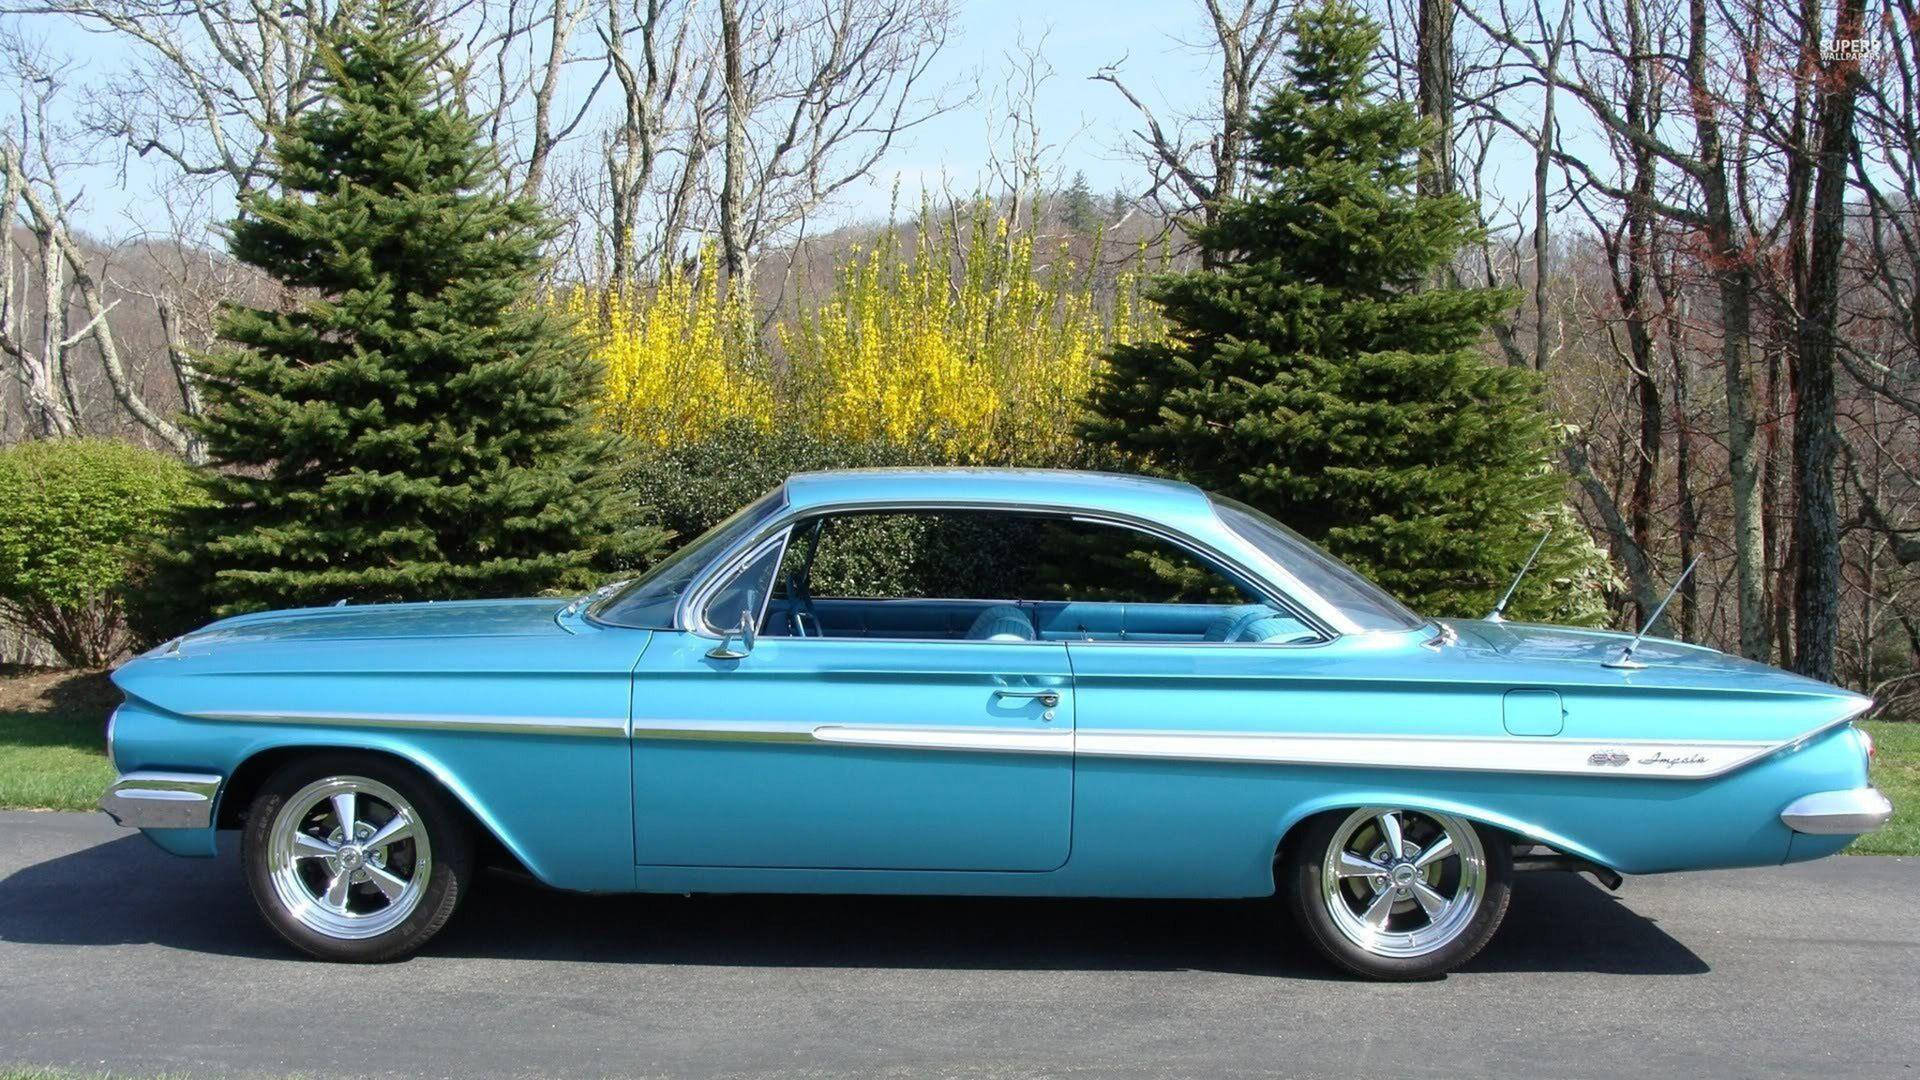 Neon Blue Chevrolet Impala 1967 Background